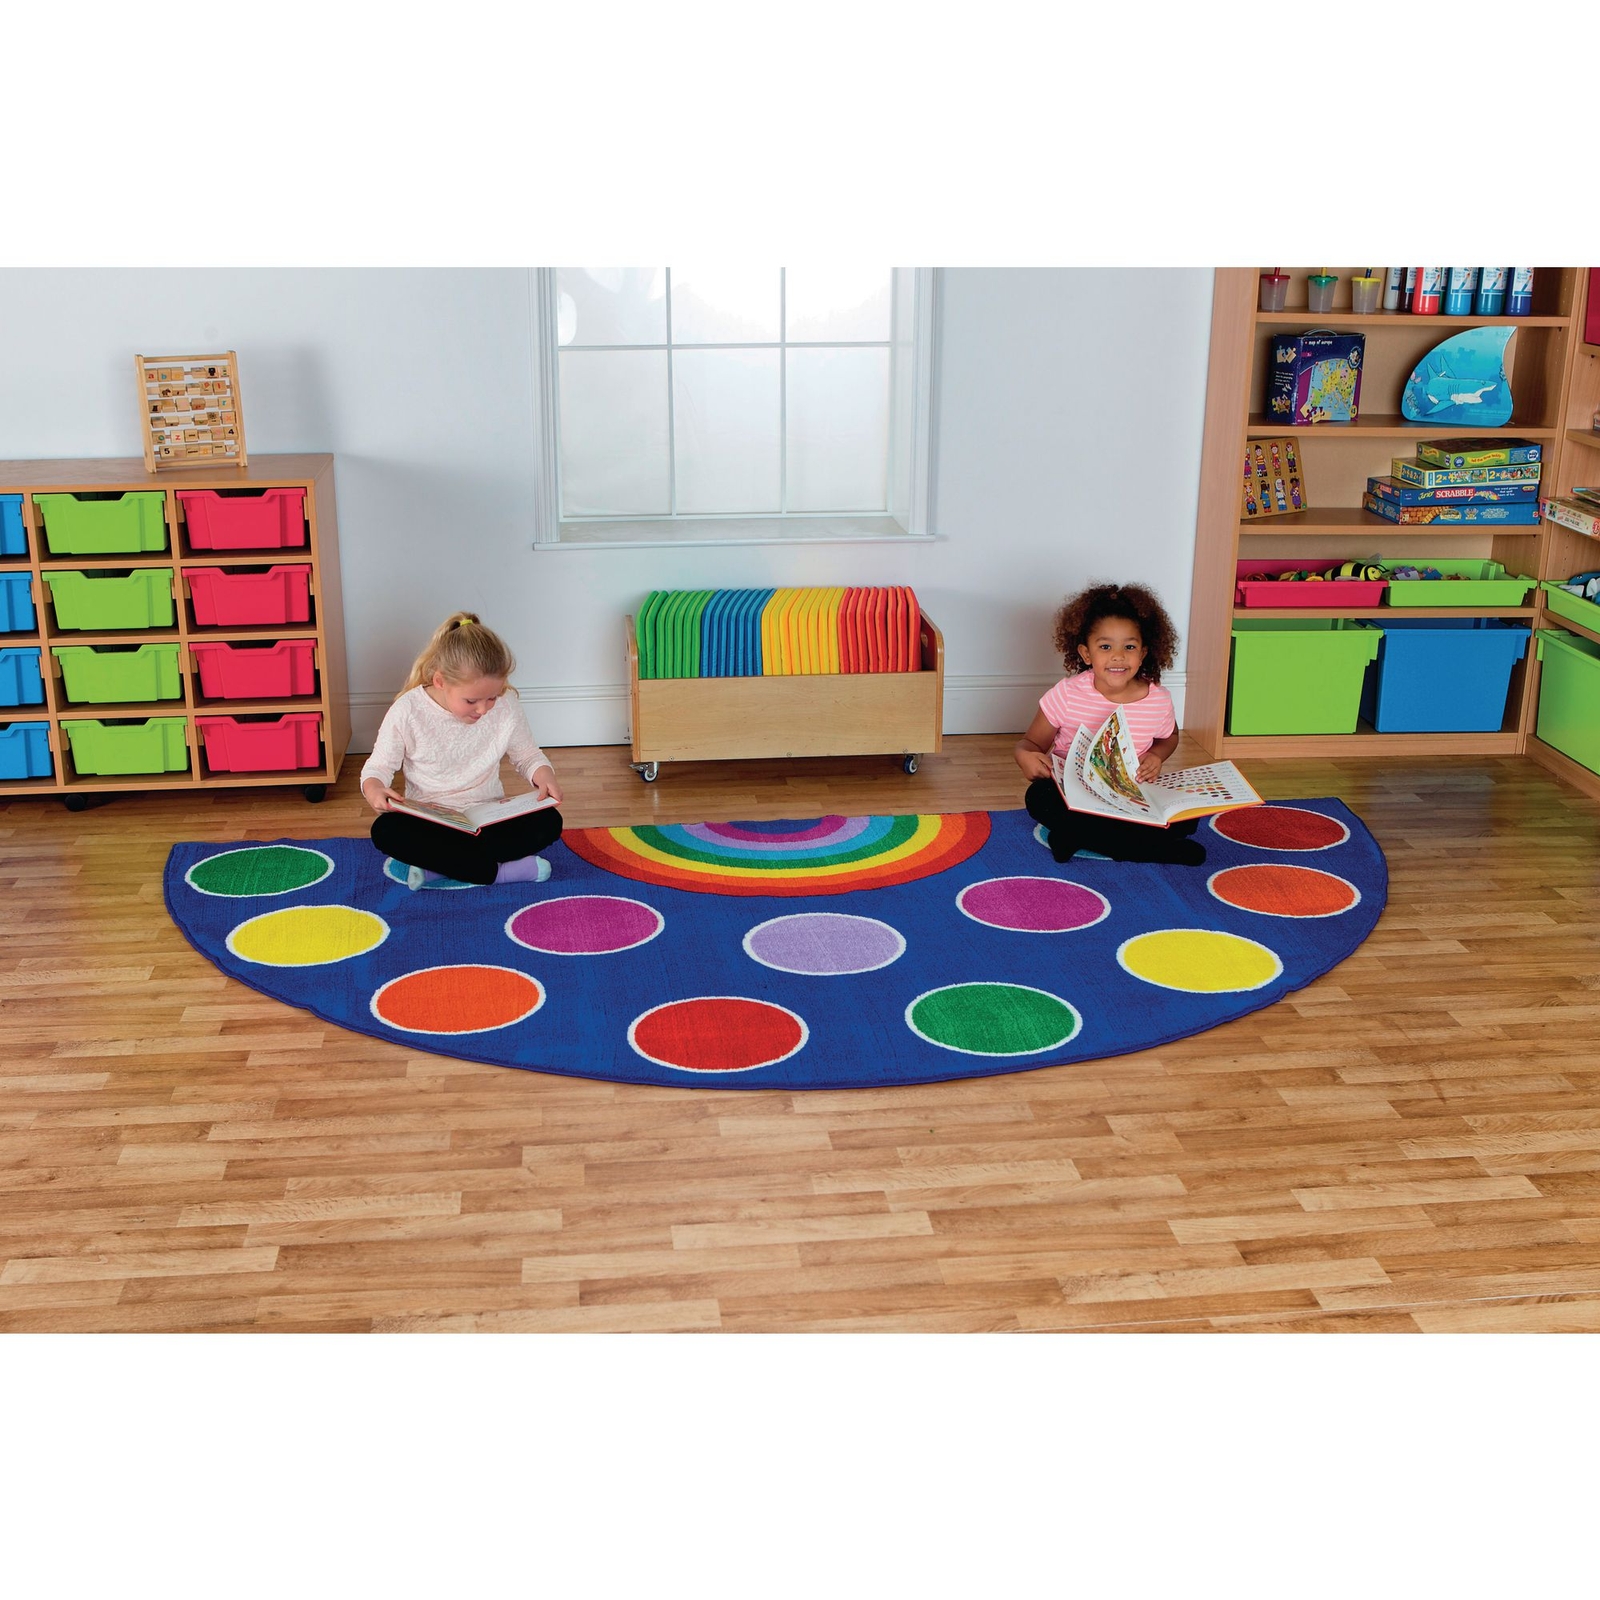 Rainbow Semi-Circle Carpet - Small 1.5 x 3m